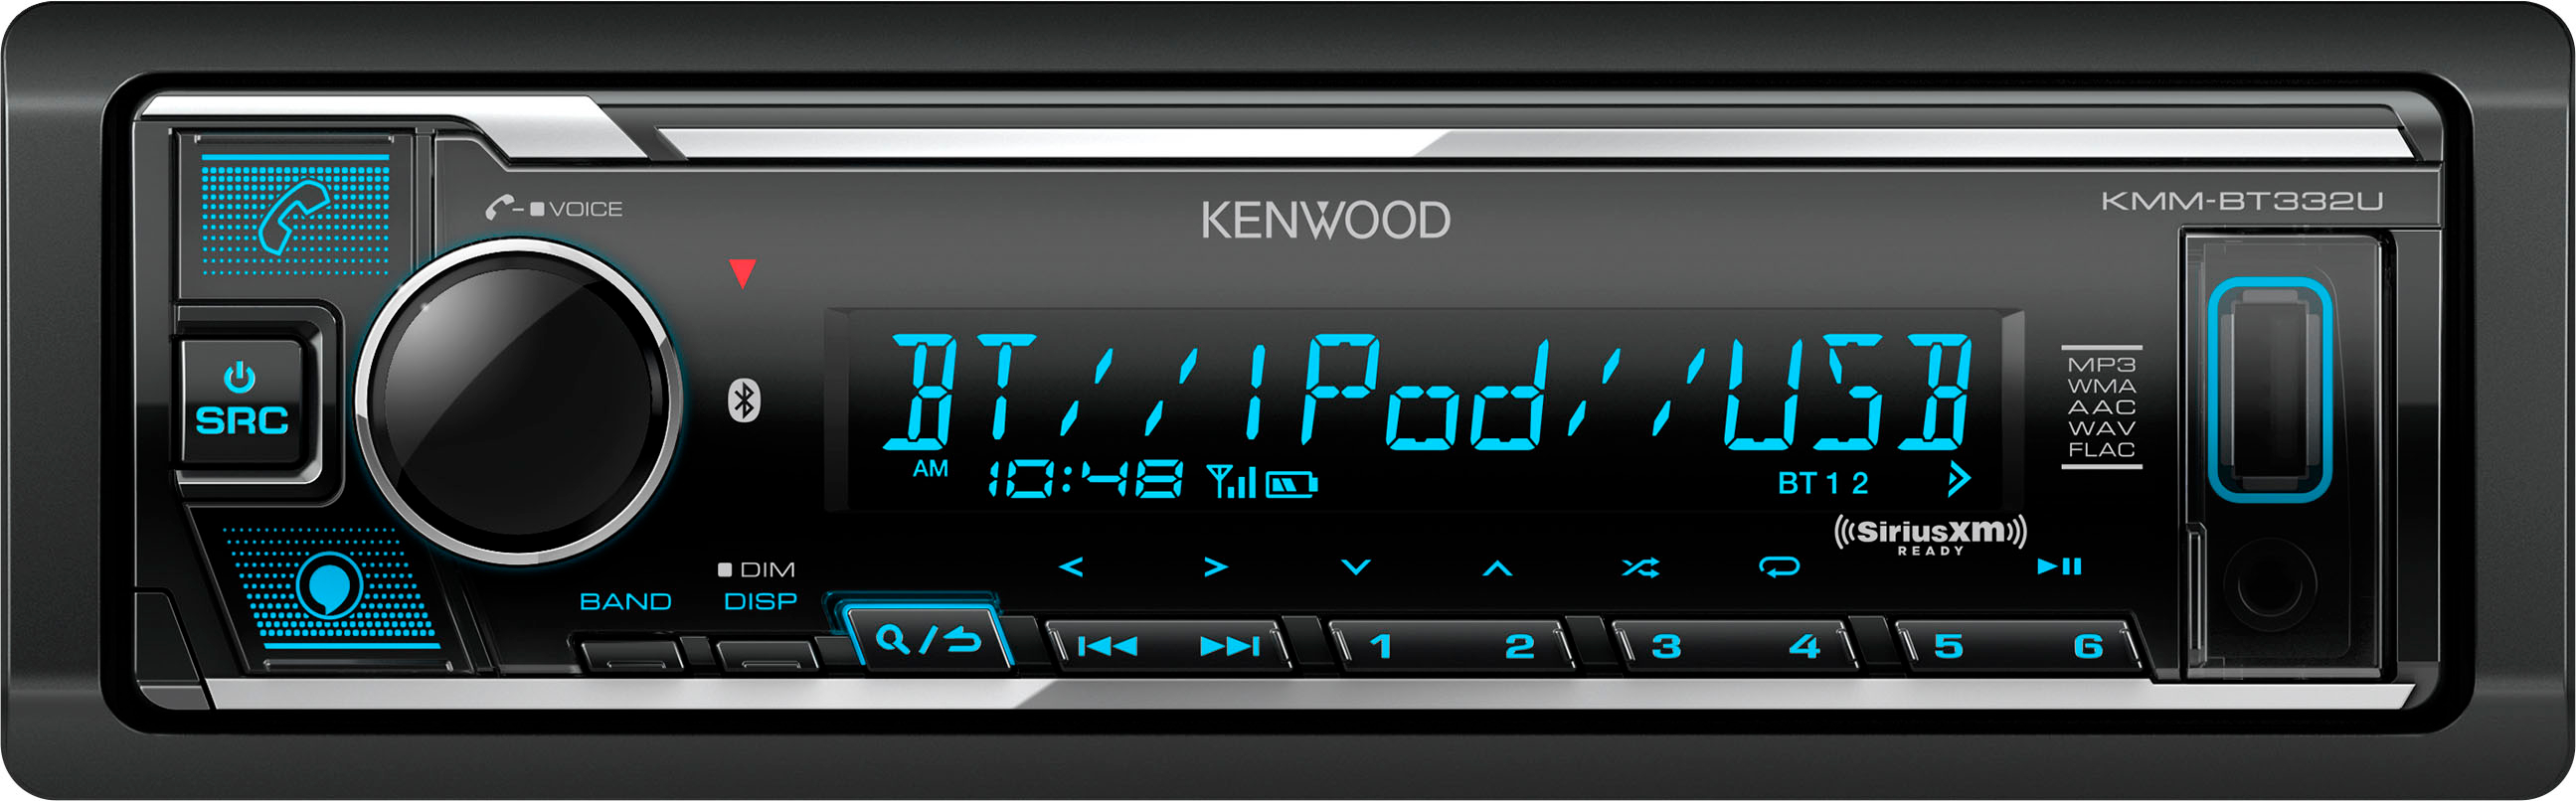 Kenwood Bluetooth Digital (DM) Receiver with Alexa Built-In and Satellite Radio-Ready Black - Best Buy